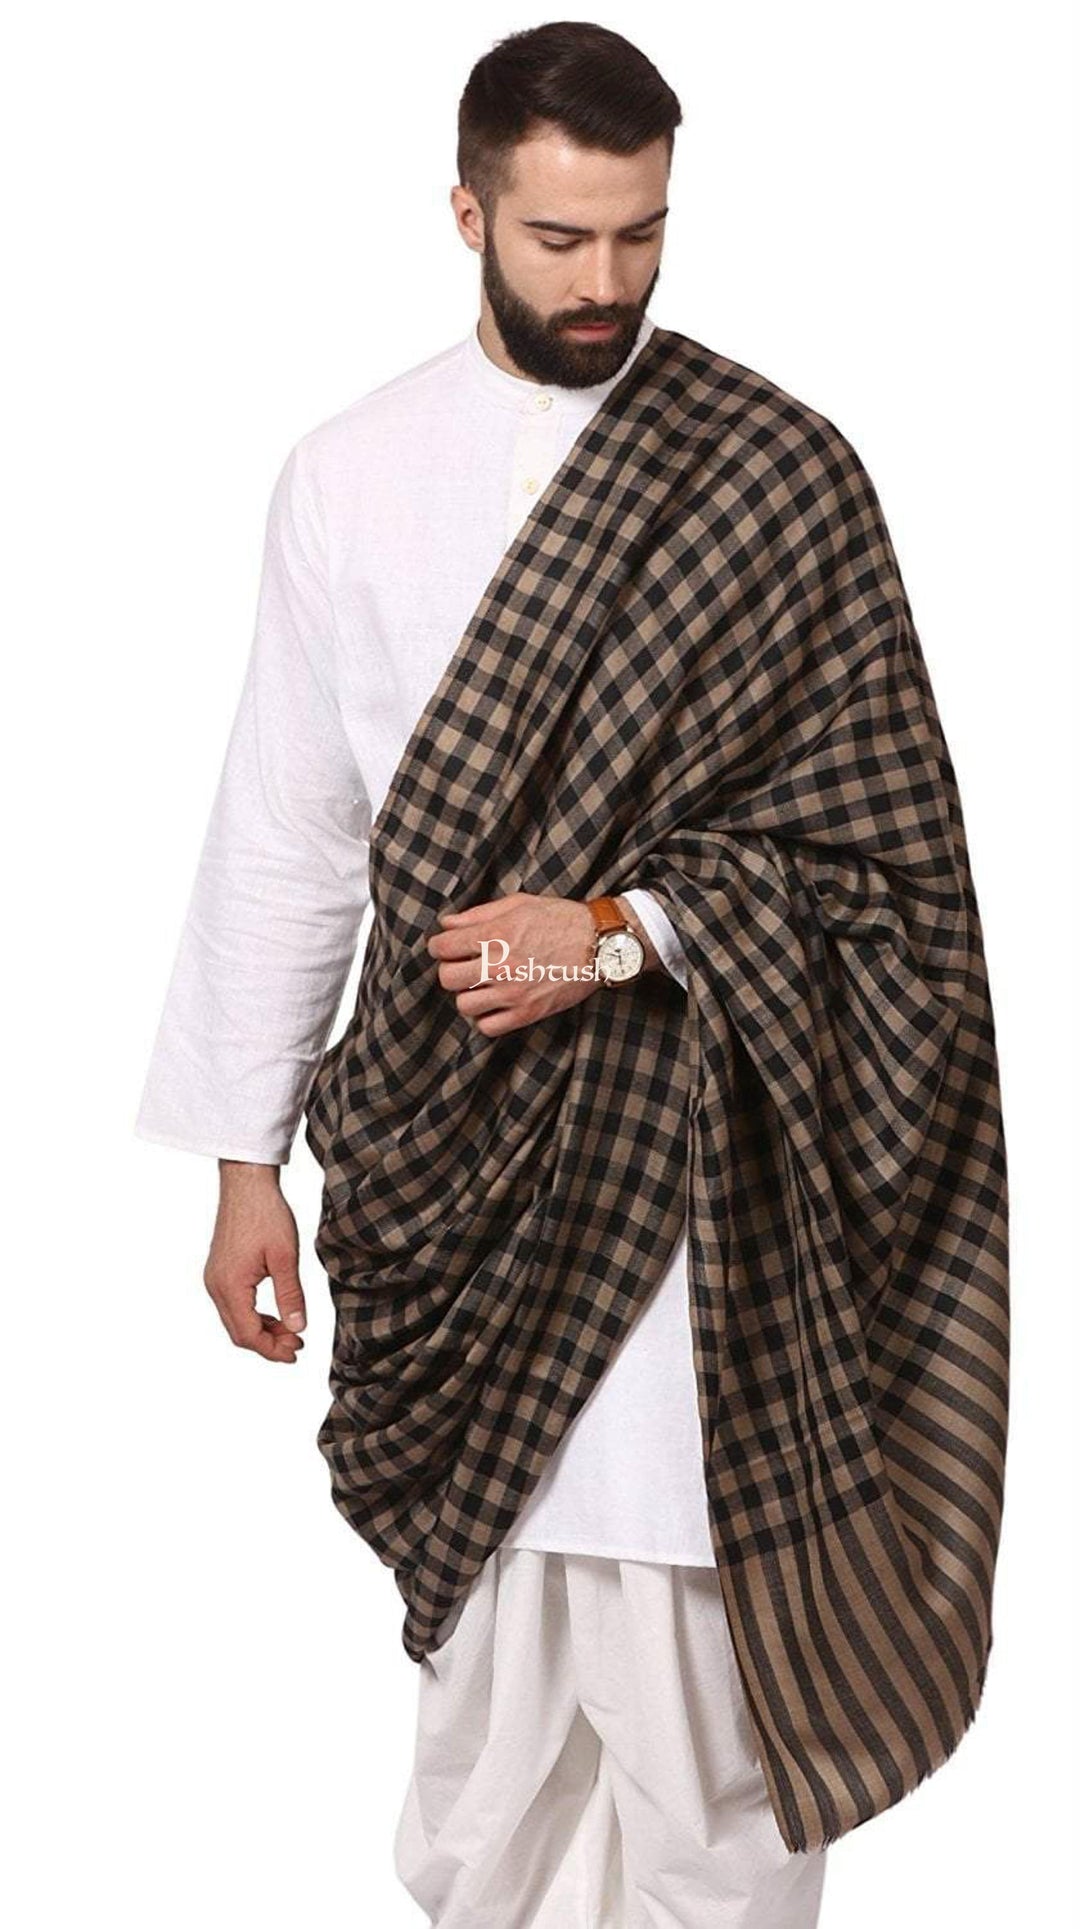 Pashtush India Mens Shawls Gents Shawl Pashtush Mens Woven Check Shawl  Light Weight - Fine Wool.